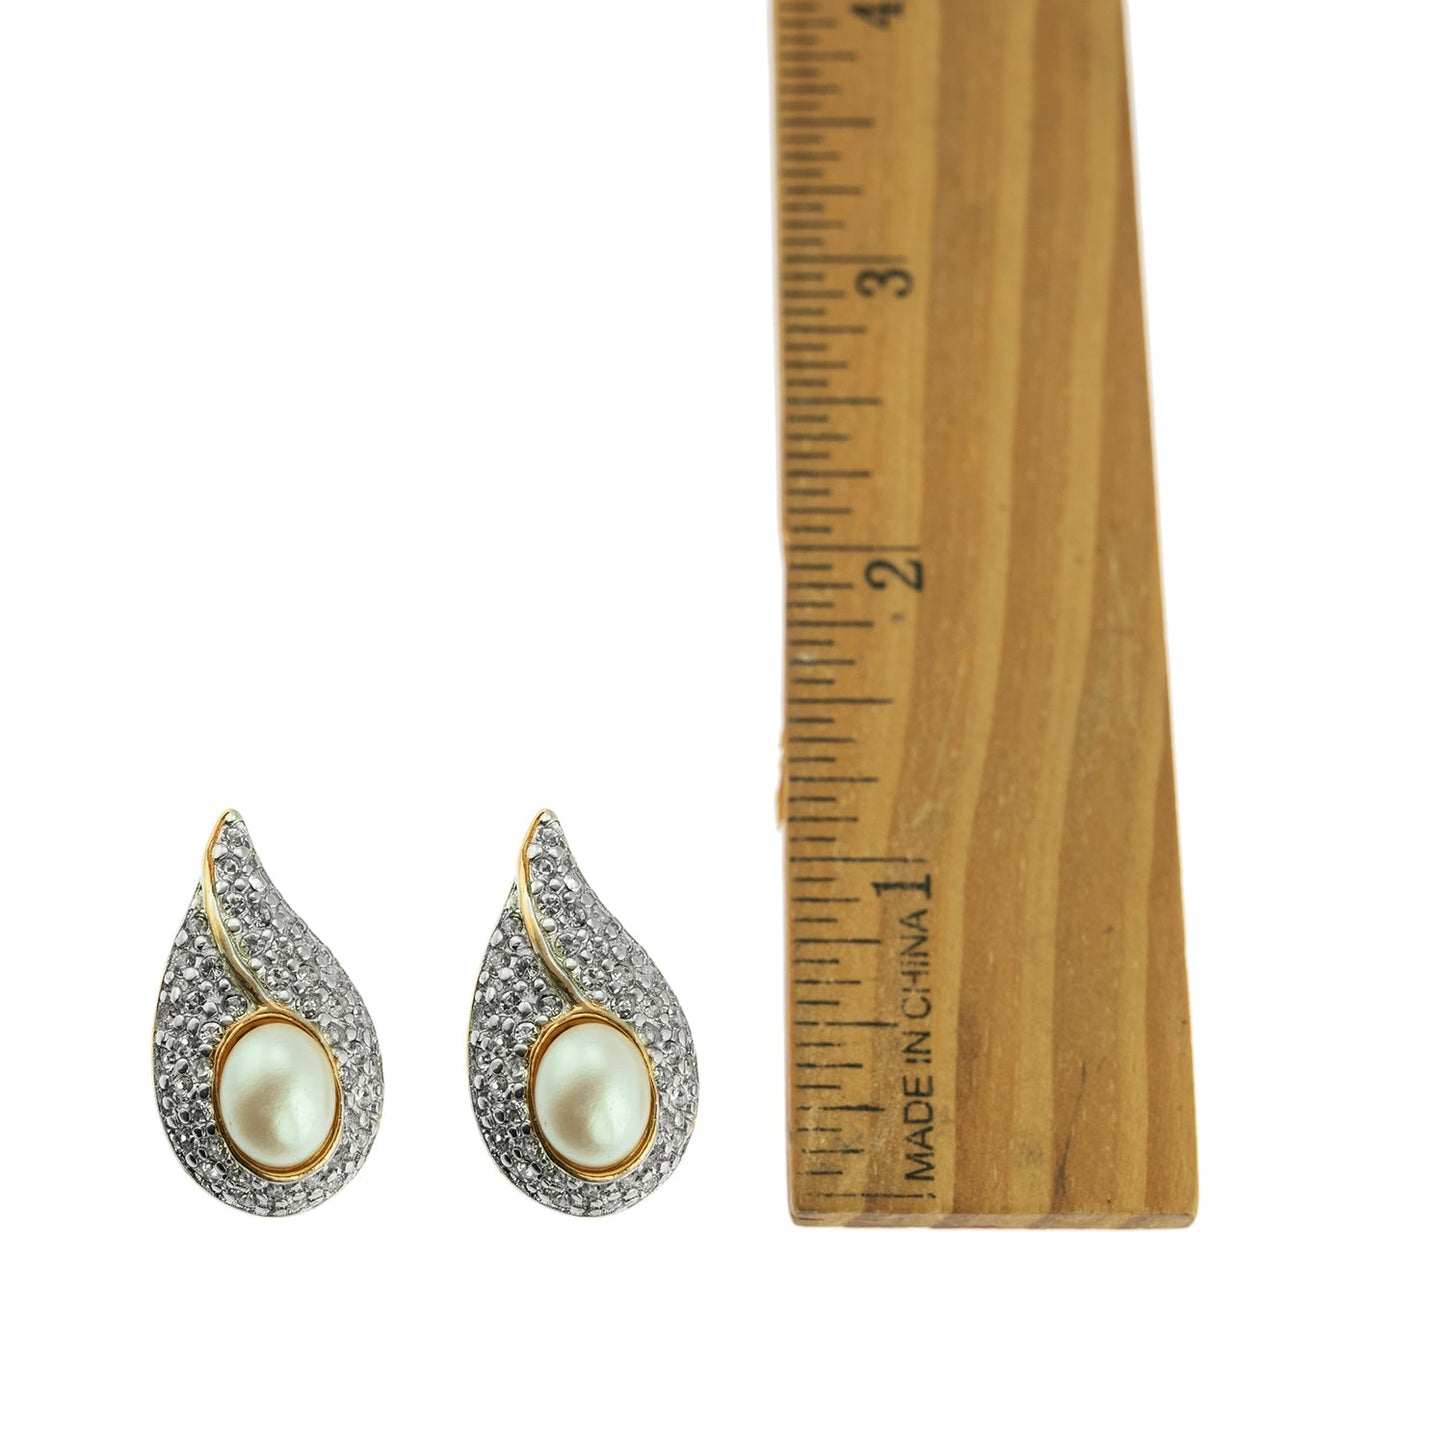 Vintage Earrings Pearl Earrings 18kt Gold Swarovski Crystals Pierced or Screw Back Clip Earrings #E359 by PVD Vintage Jewelry